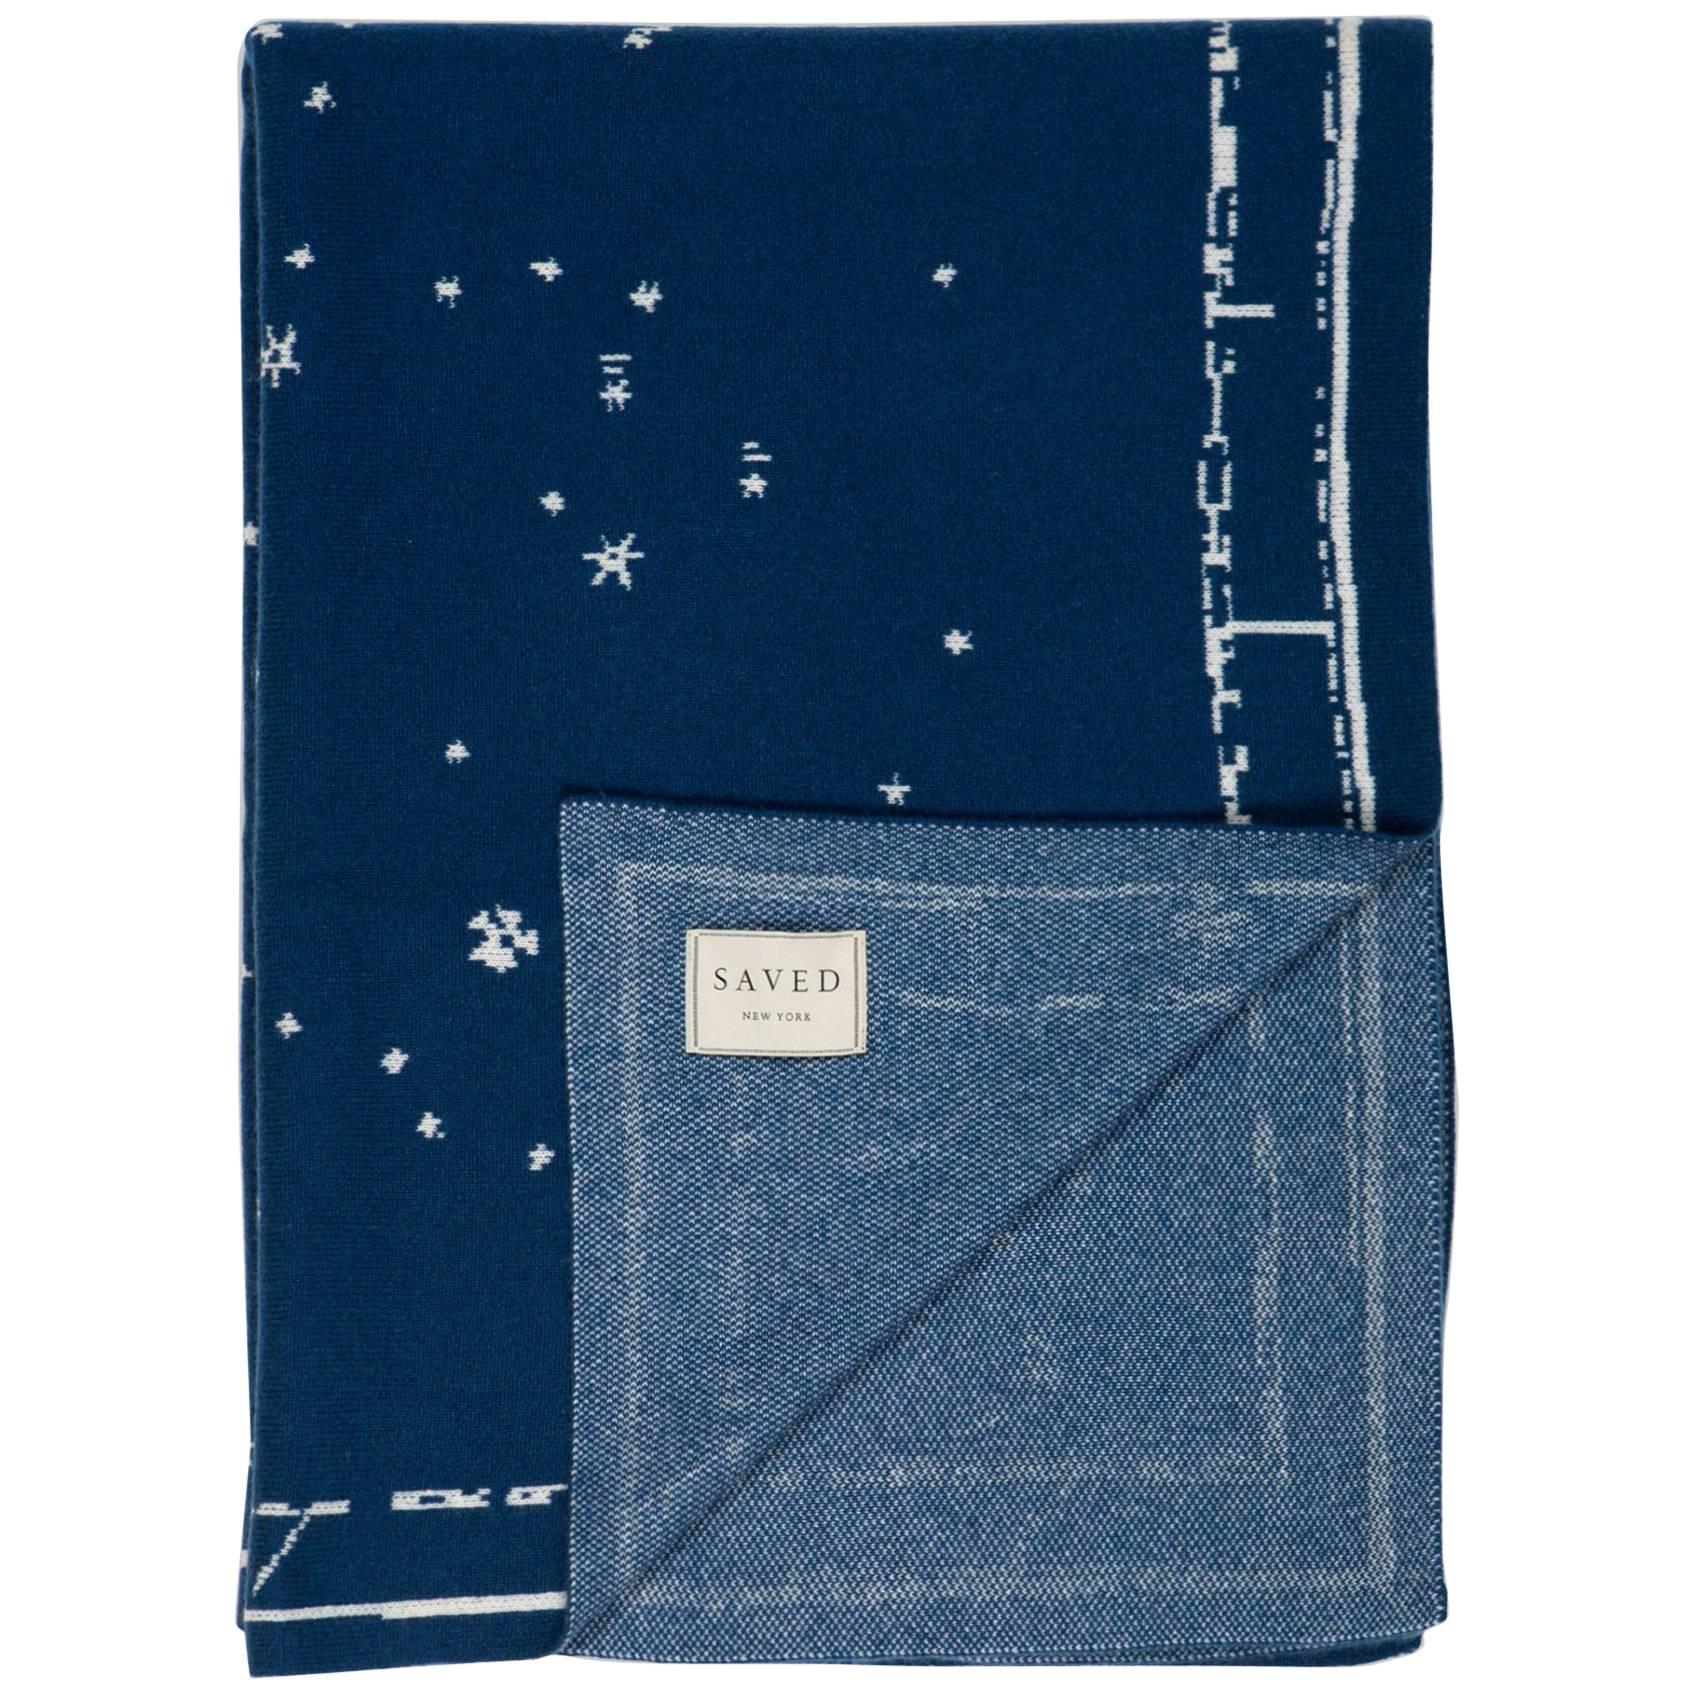 Constellation Blanket by Saved, New York